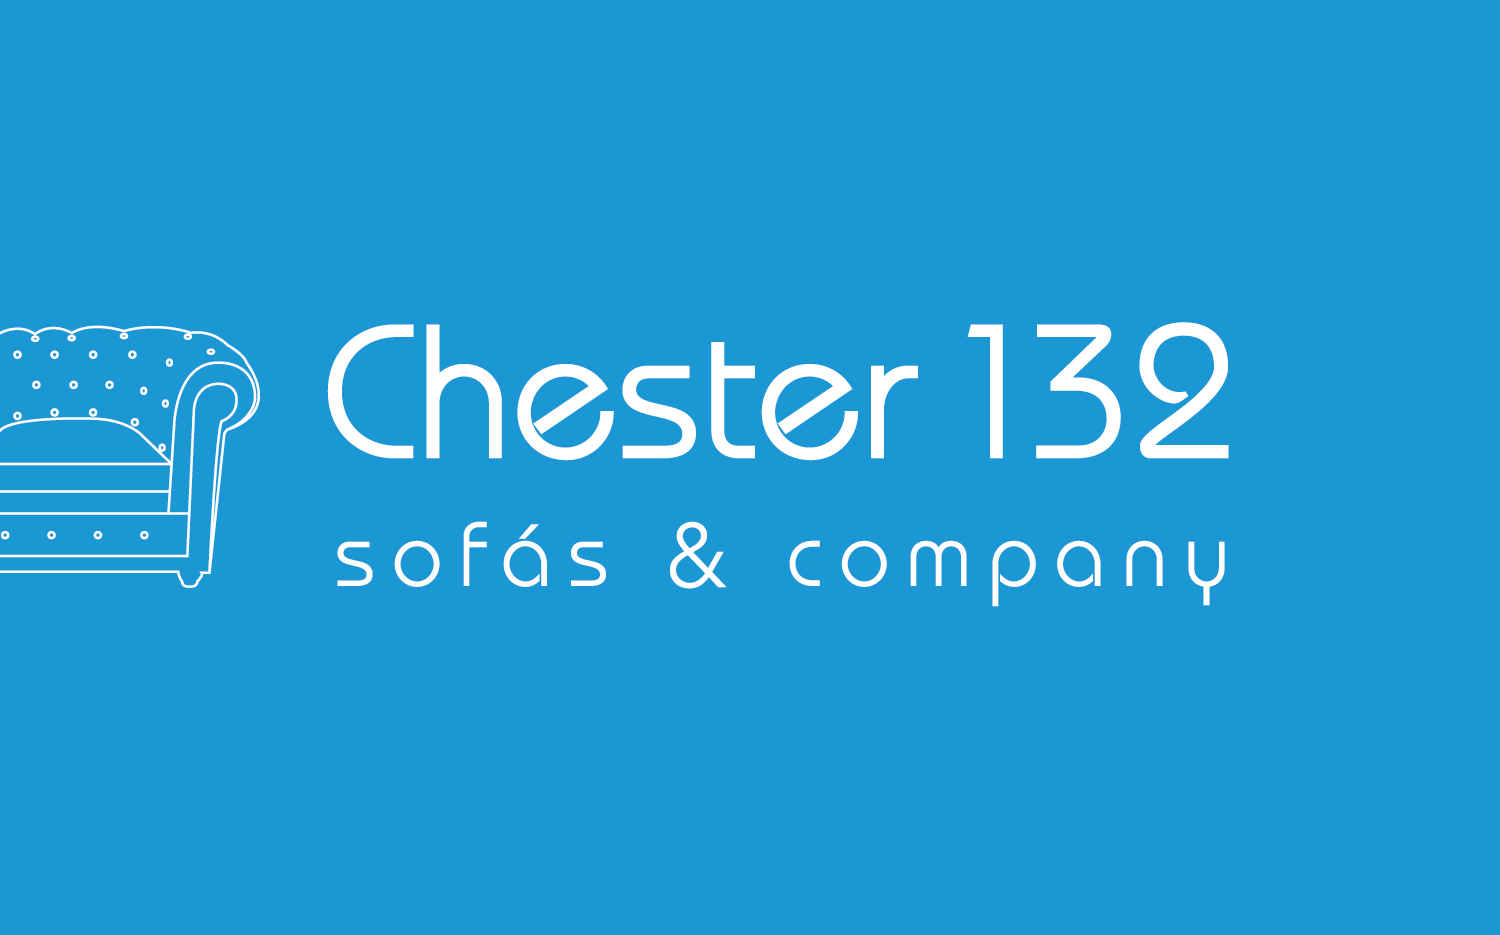 Identidad corporativa de Chester 132